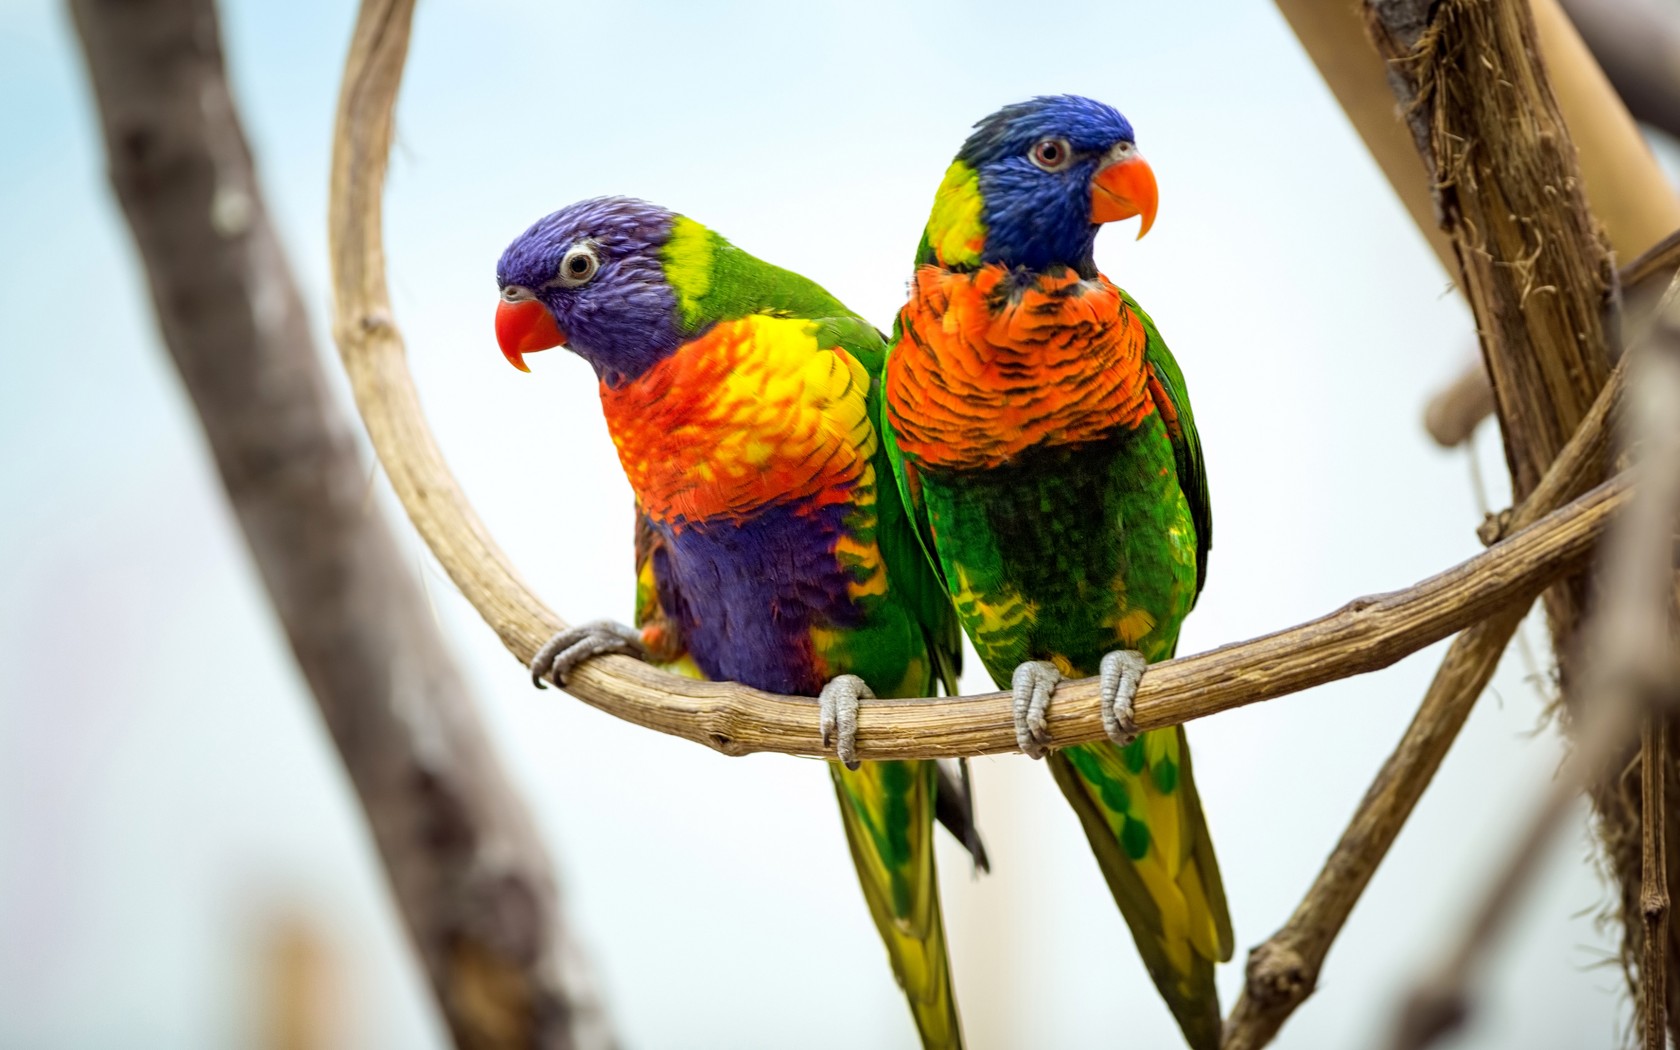 Beautiful Green & colorful Parrots Wallpaper